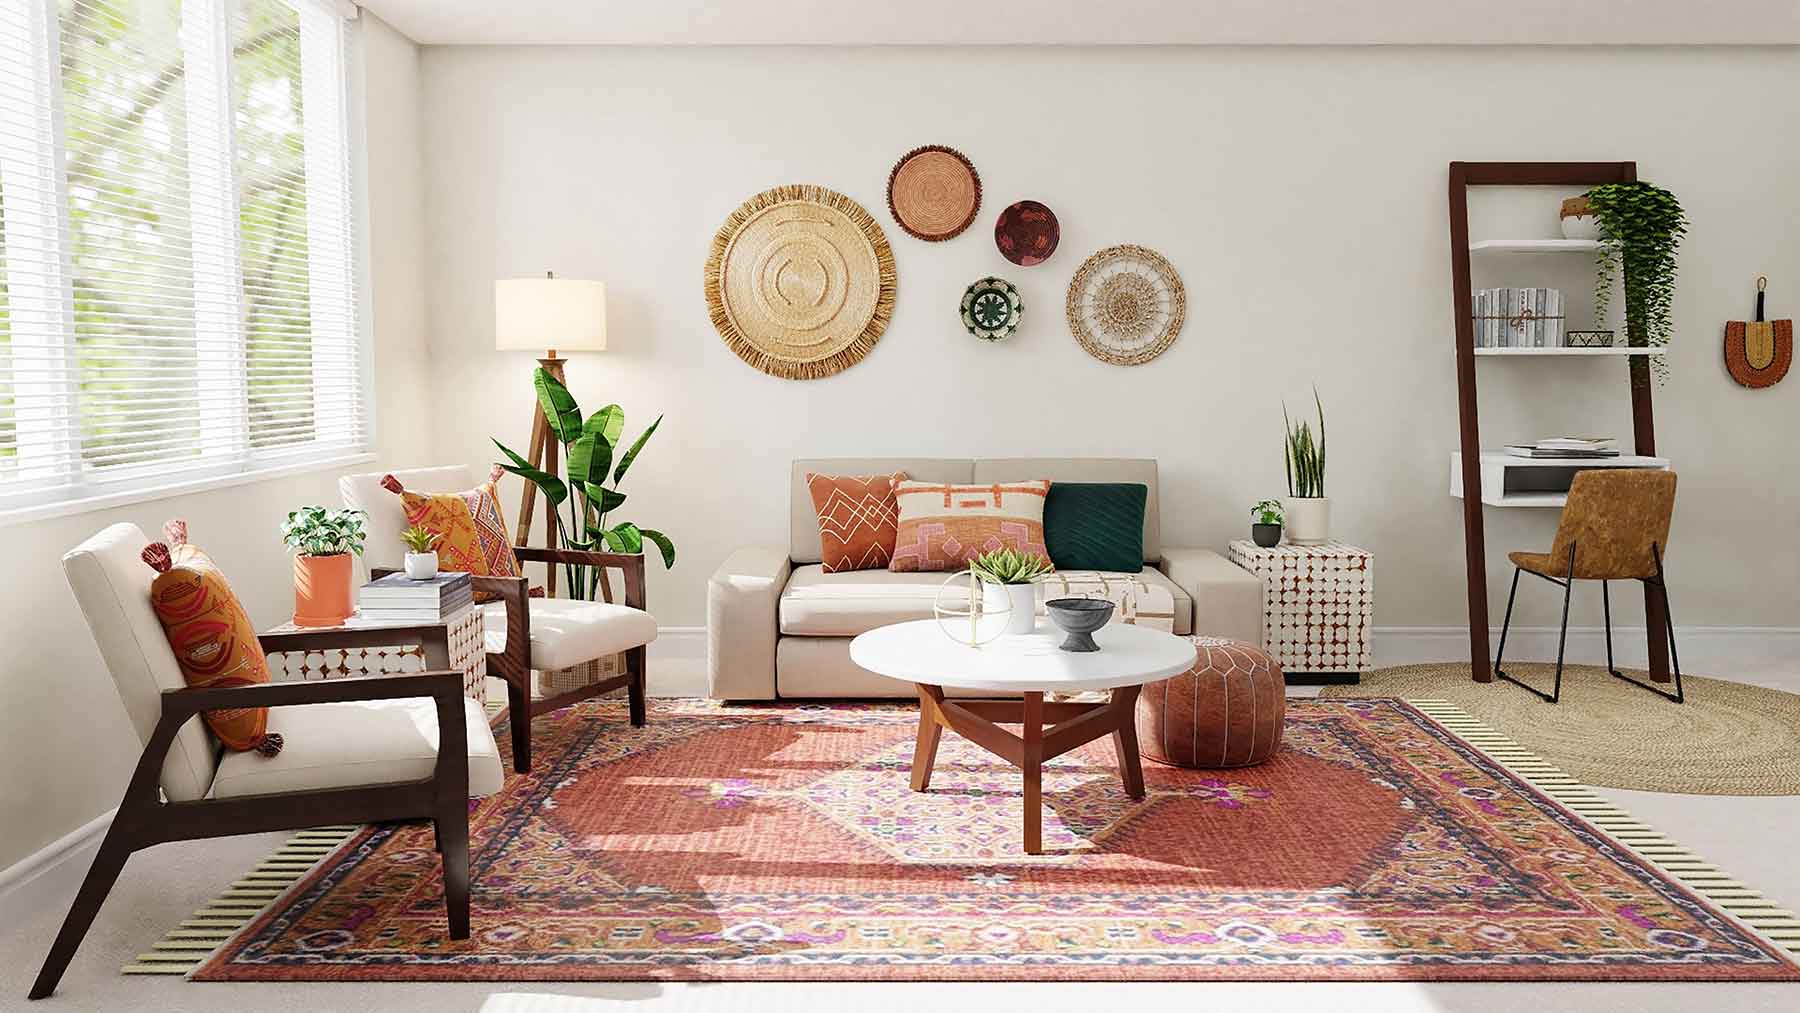 Home Decor Ideas - Kate Spade Decorating Tips